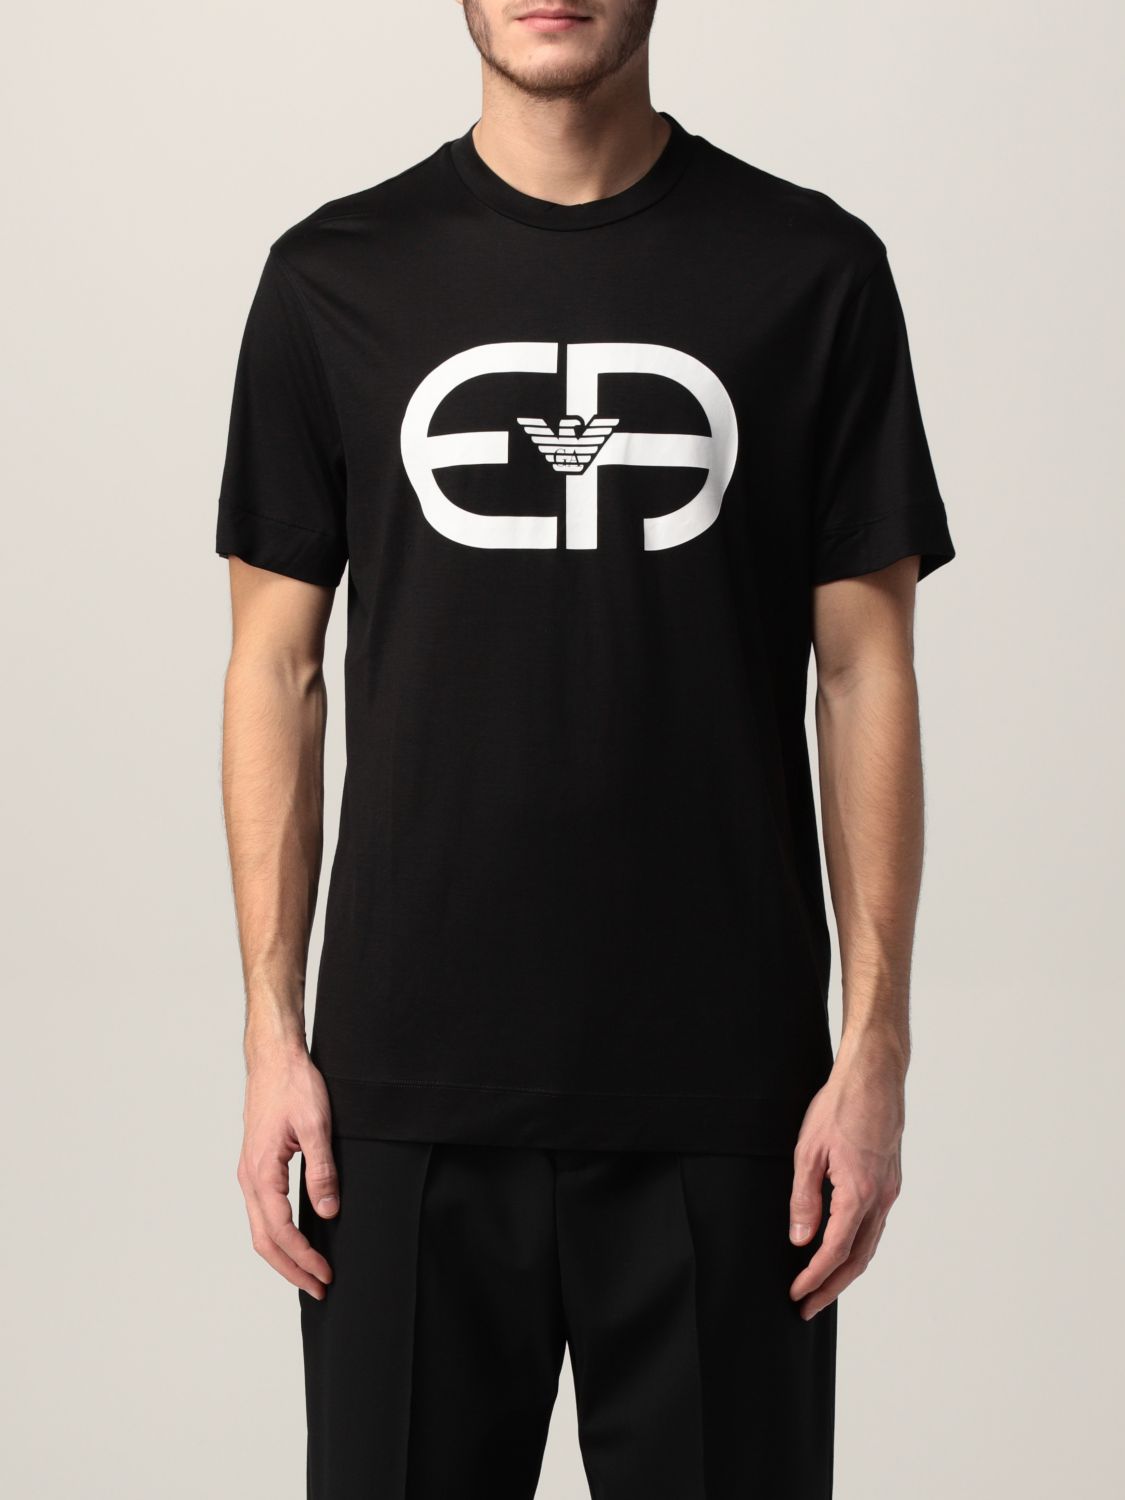 EMPORIO ARMANI: T-shirt with logo - Black | Emporio Armani t-shirt ...